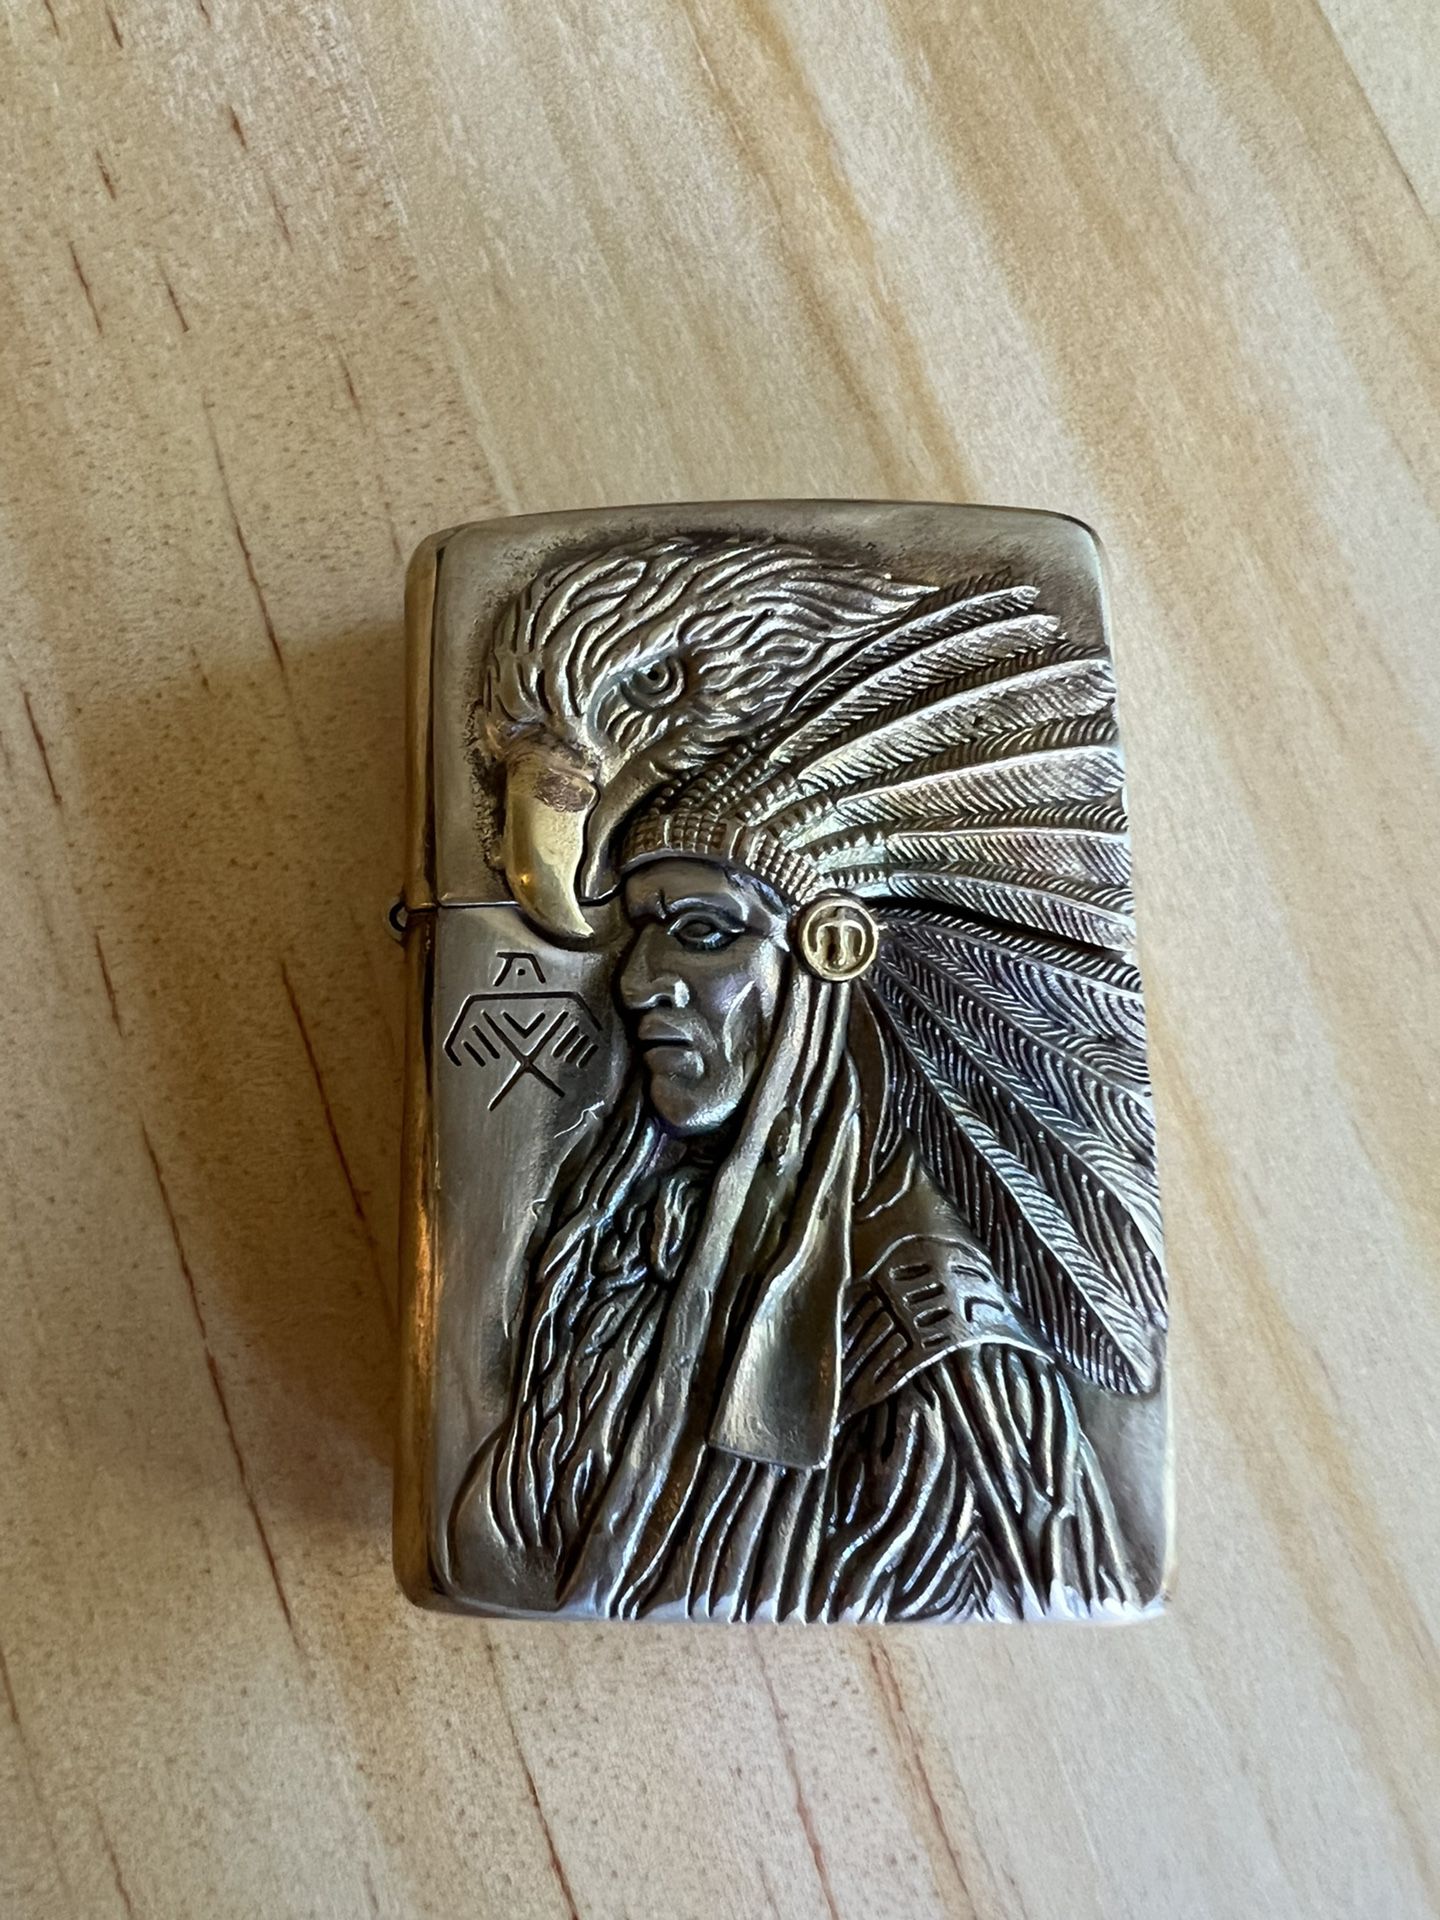 Vintage Lighter case Zippo - Native American